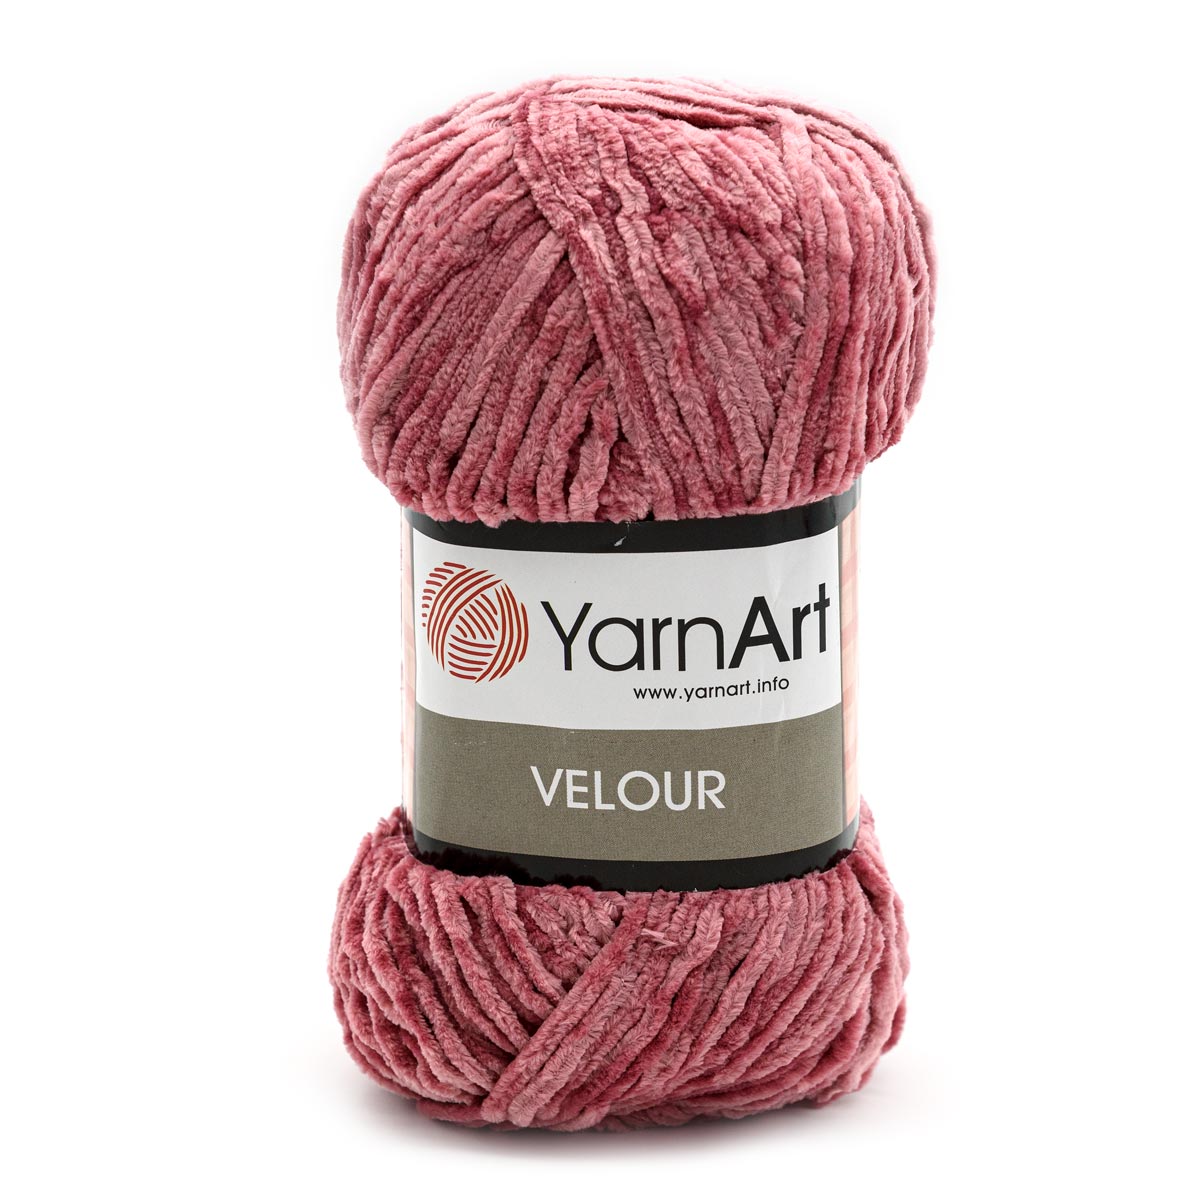 Пряжа для вязания YarnArt Velour 100 г 170 м микрополиэстер мягкая велюровая 5 мотков 868 темно-розовый - фото 6